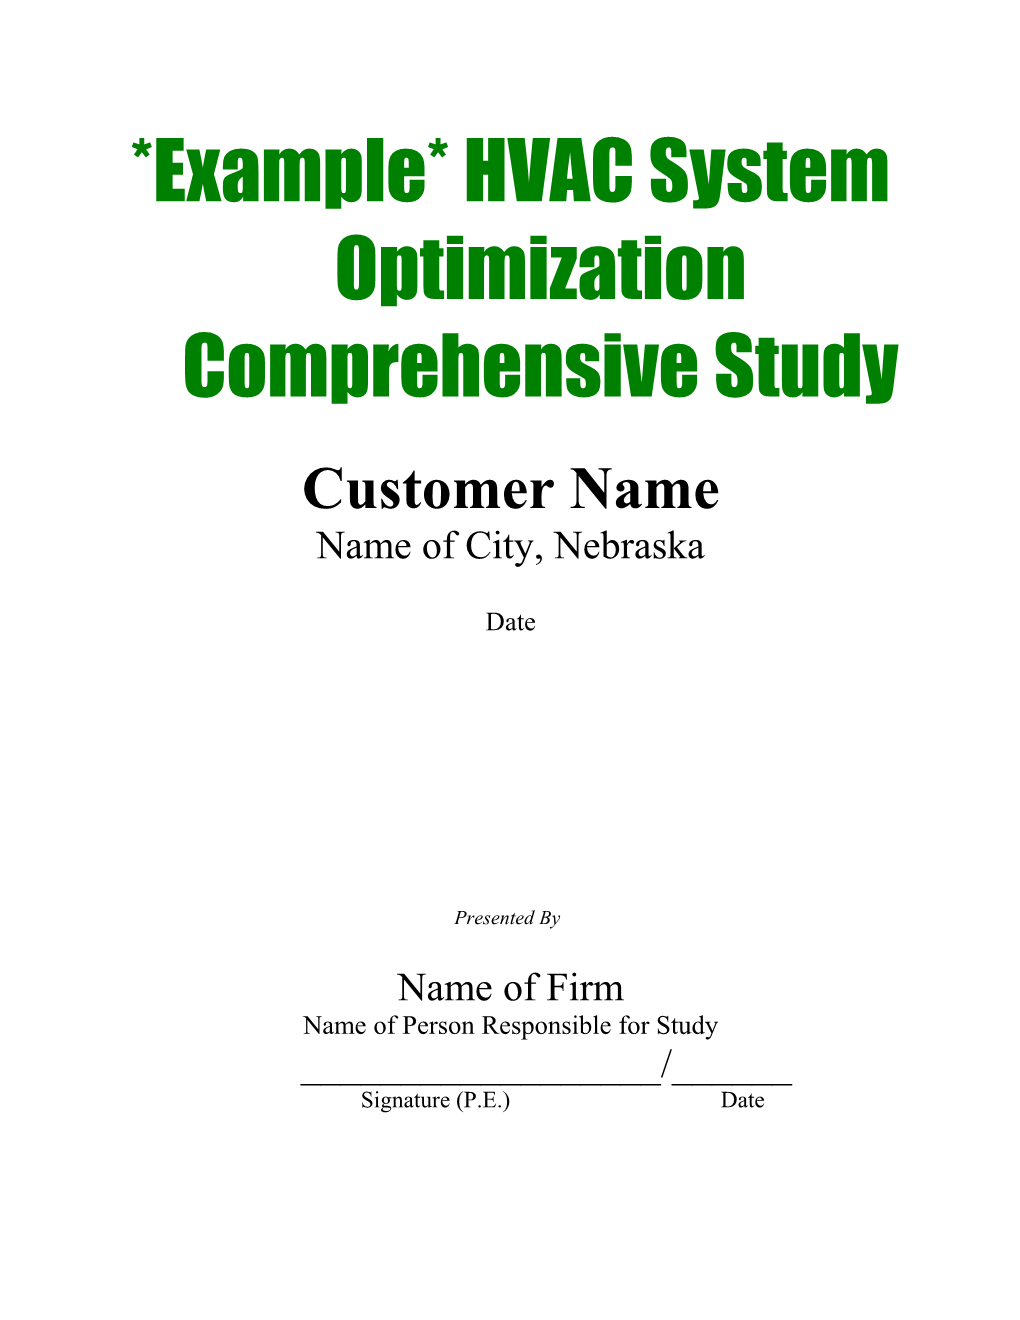 *Example* HVAC System Optimizationcomprehensive Study